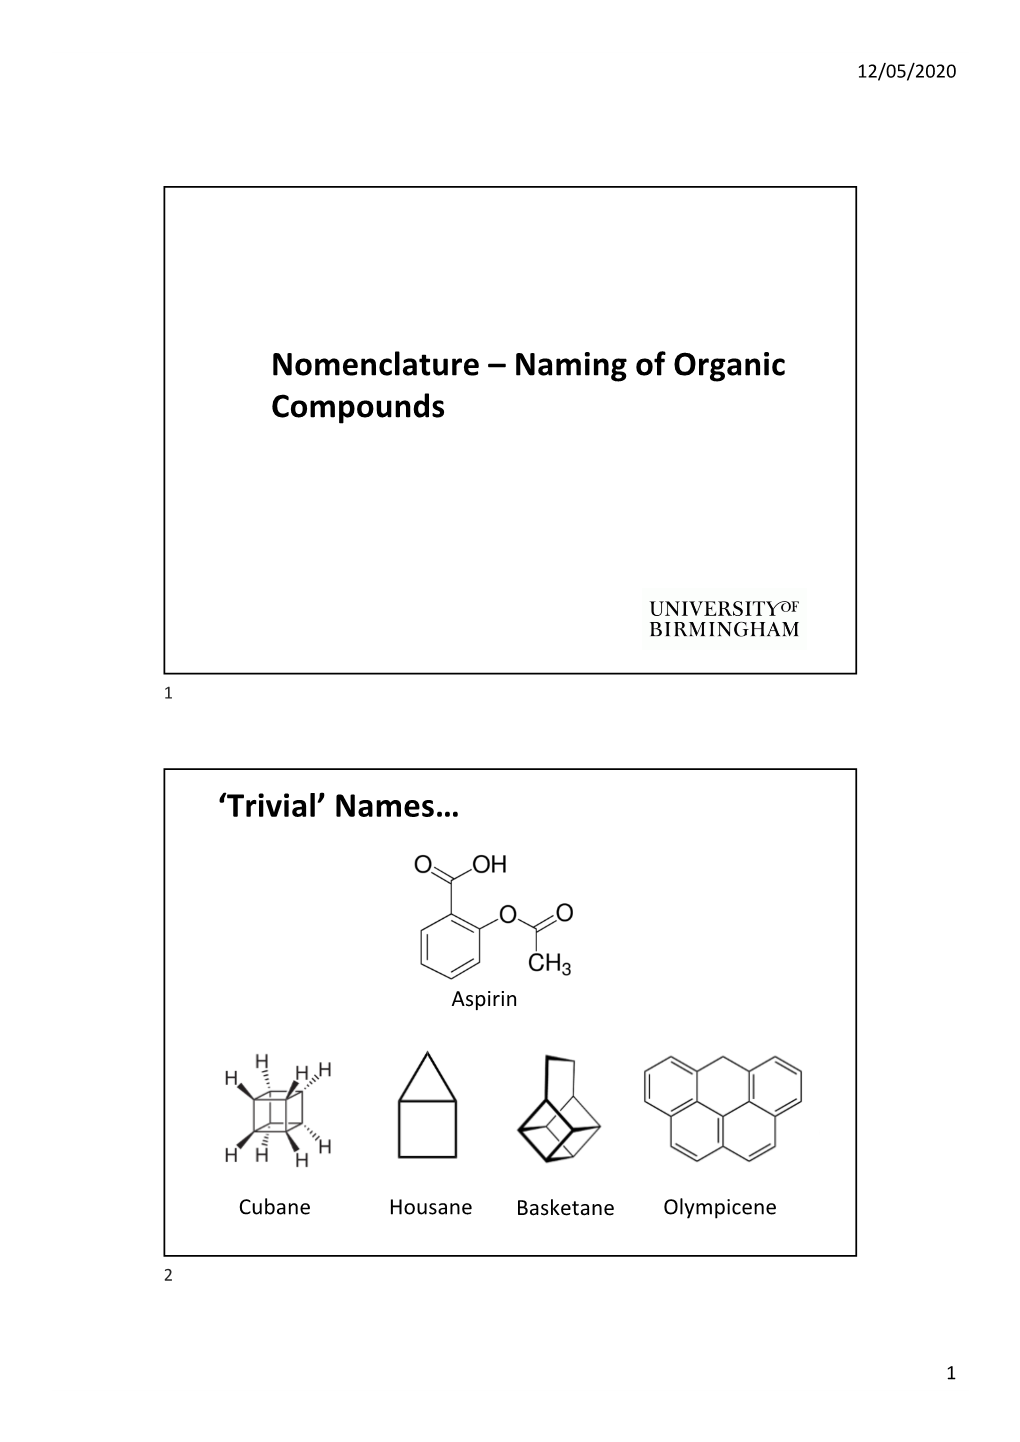 Nomenclature – Naming of Organic Compounds